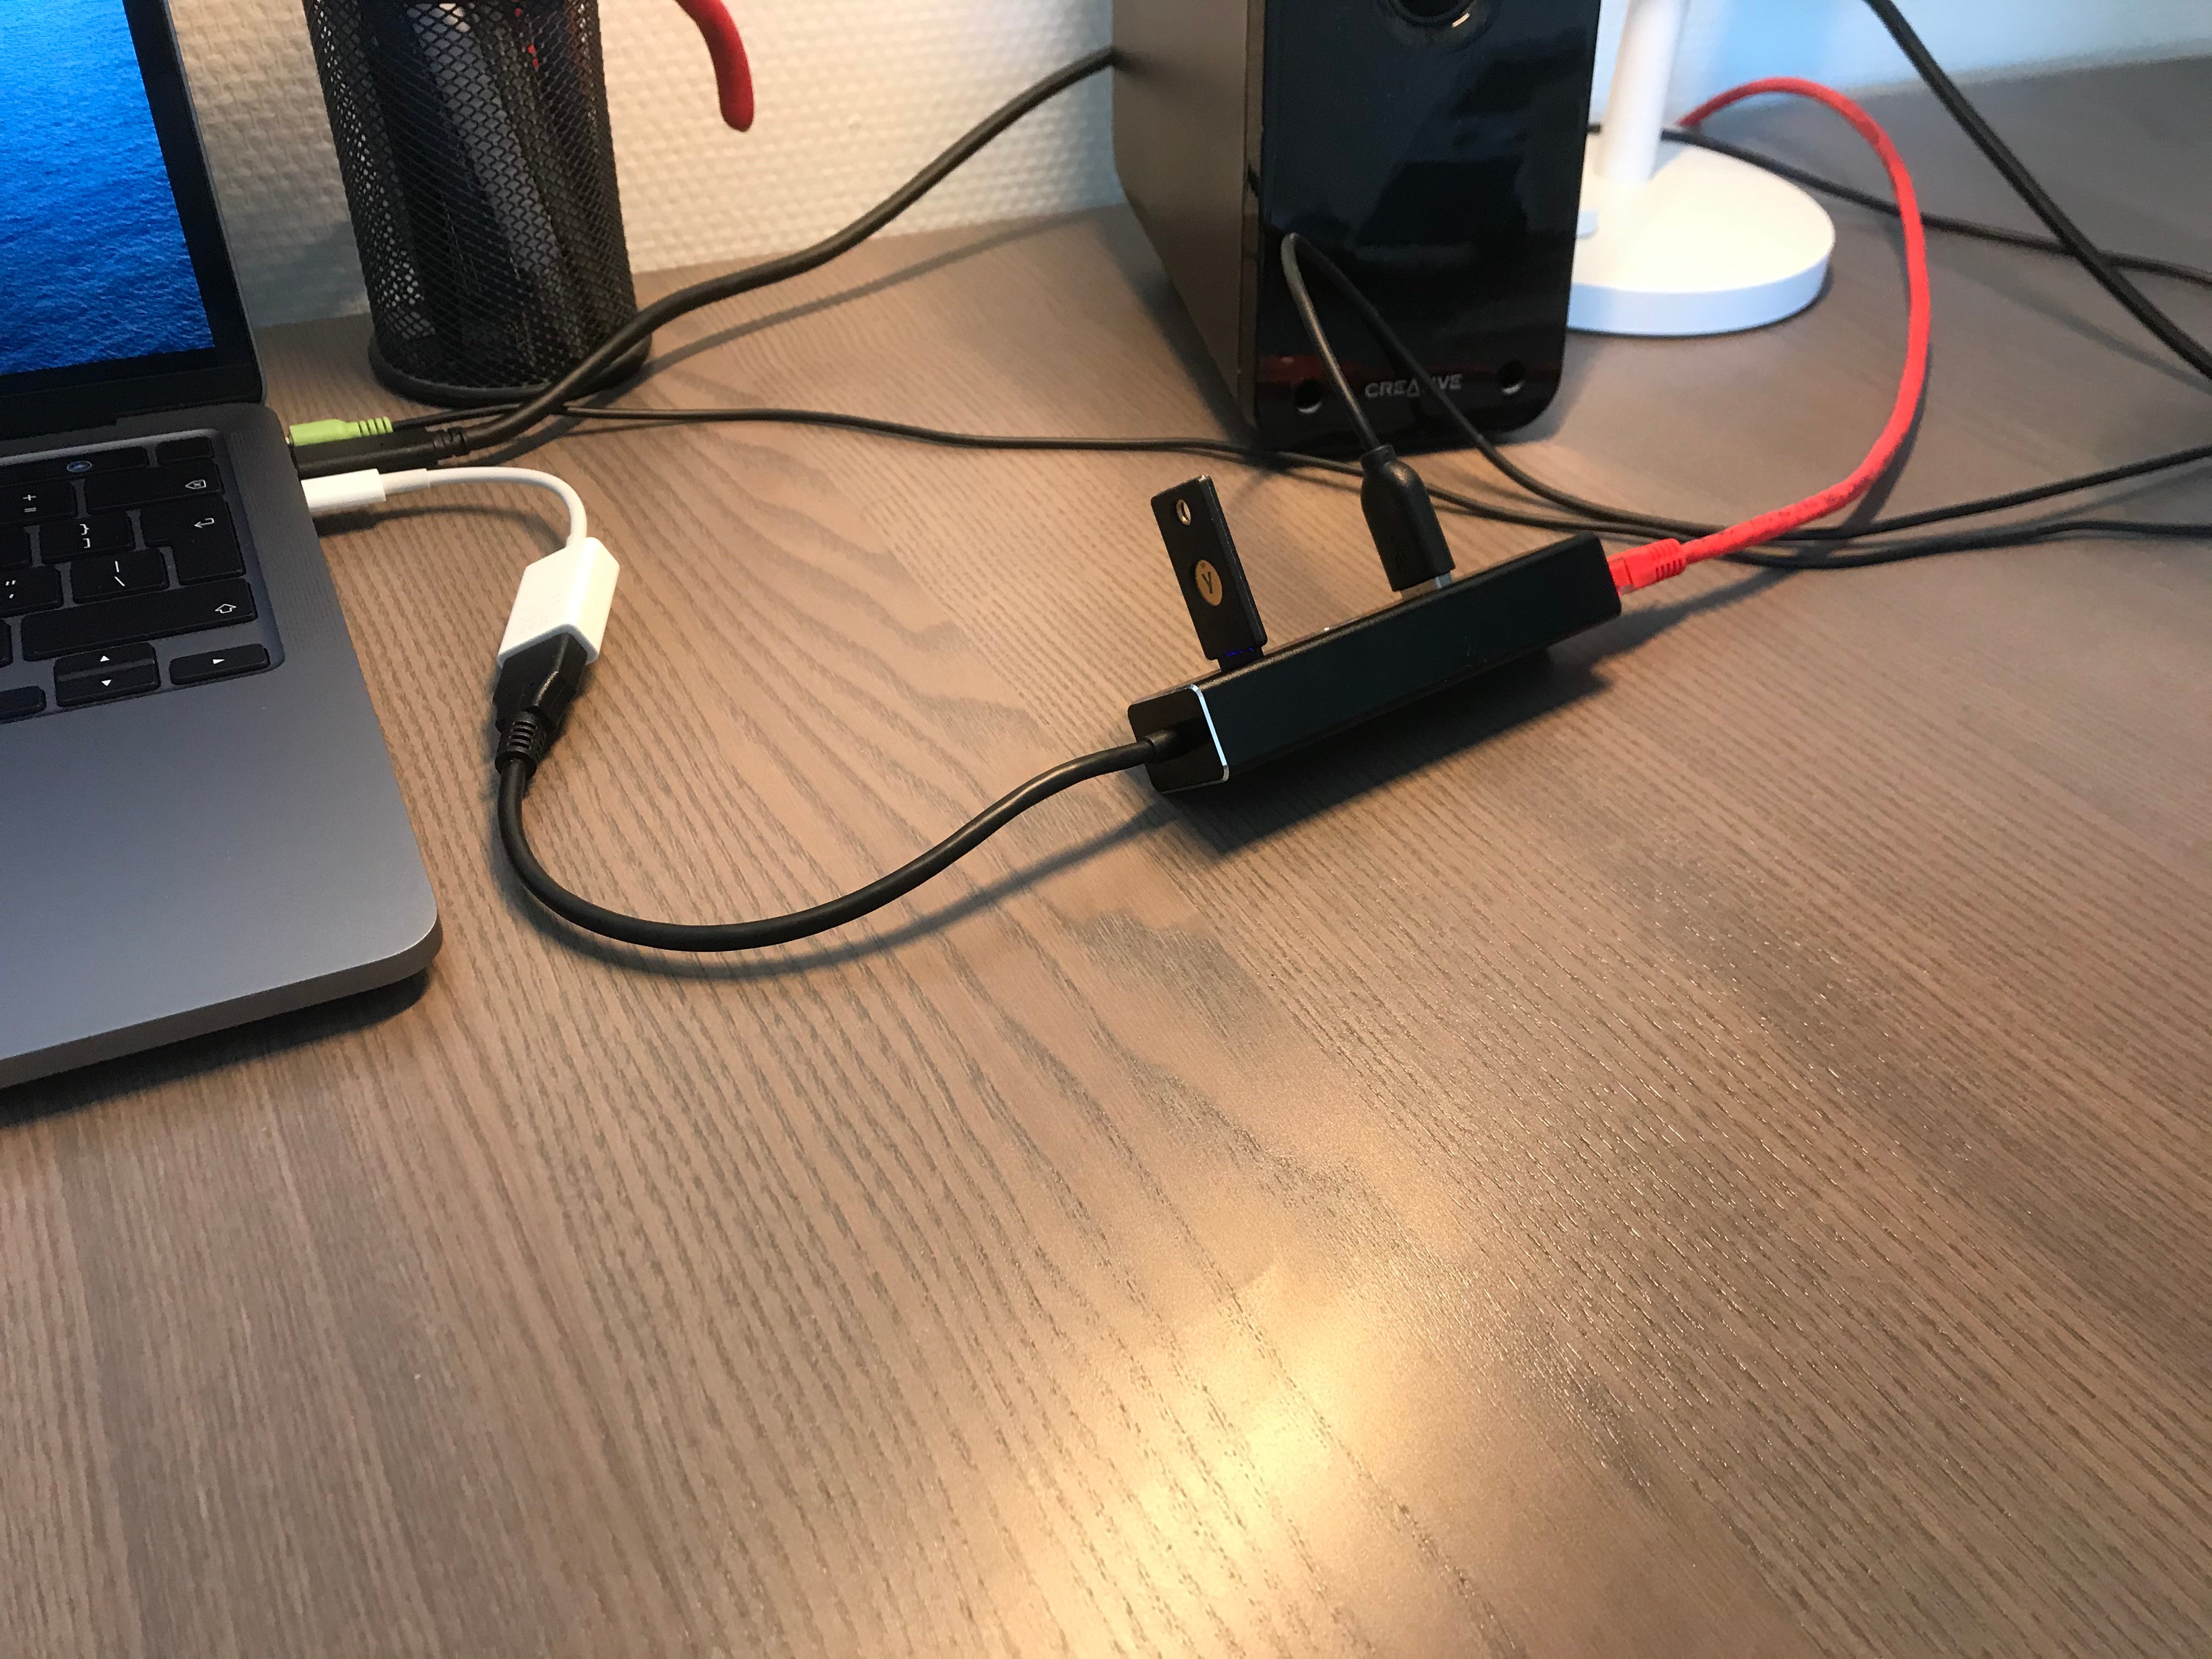 This $30 USB hub finally ended my MacBook port struggle